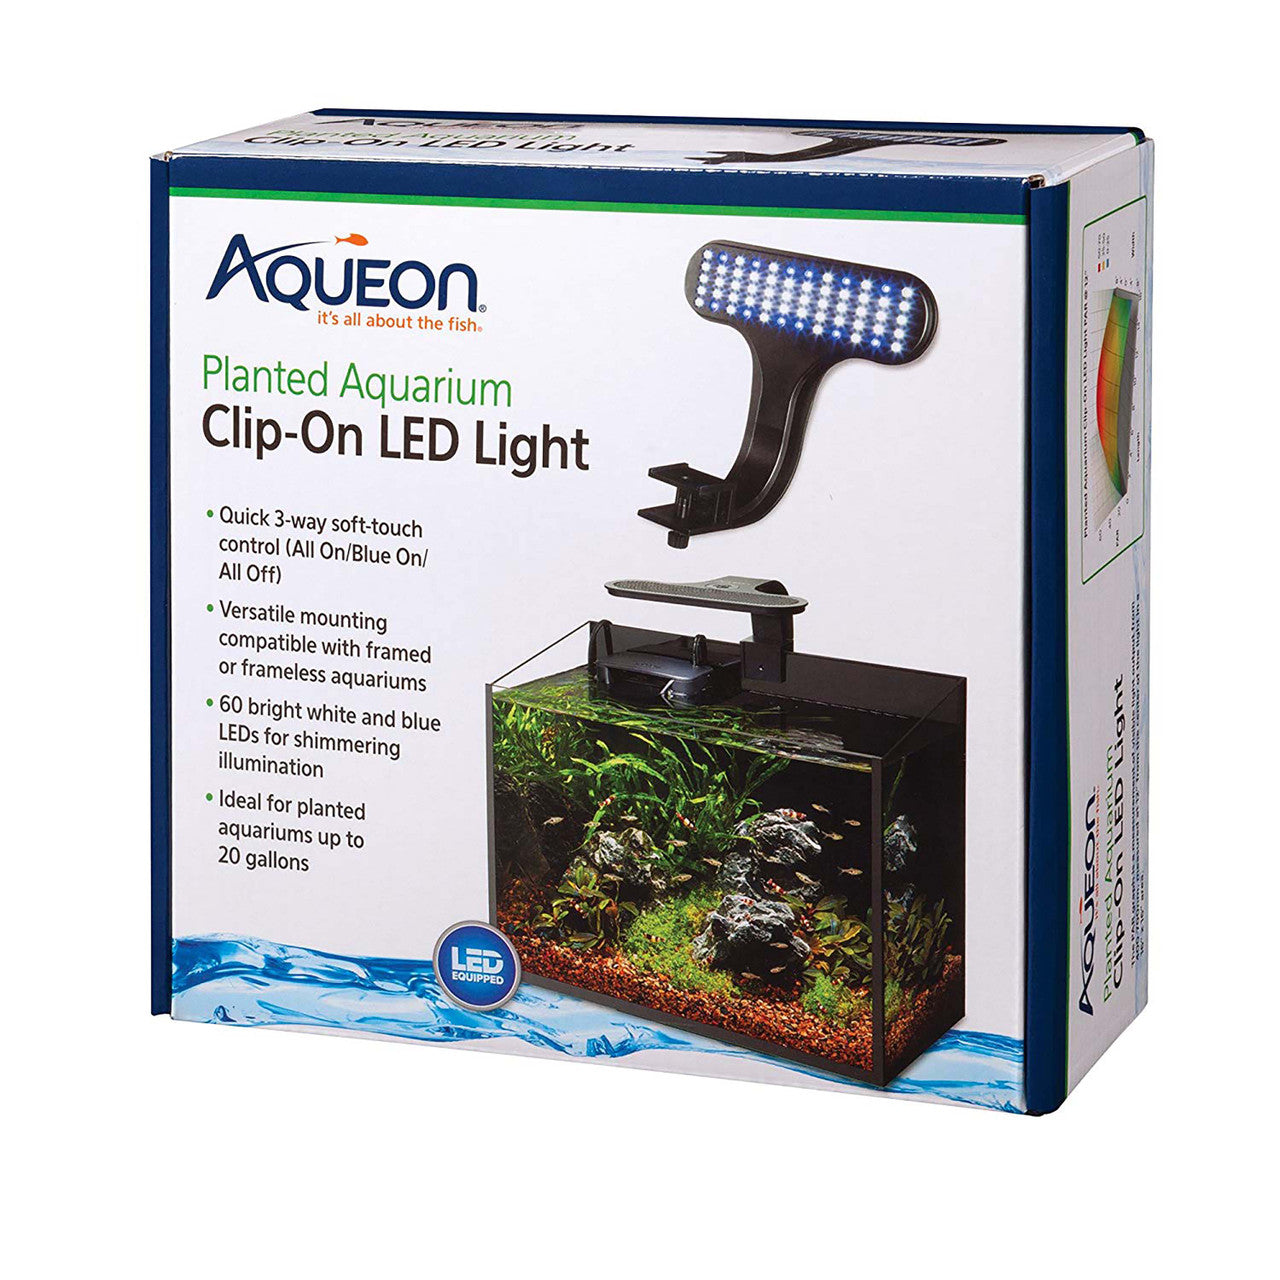 Aqueon Planted Aquarium Clip-On LED Light One Size